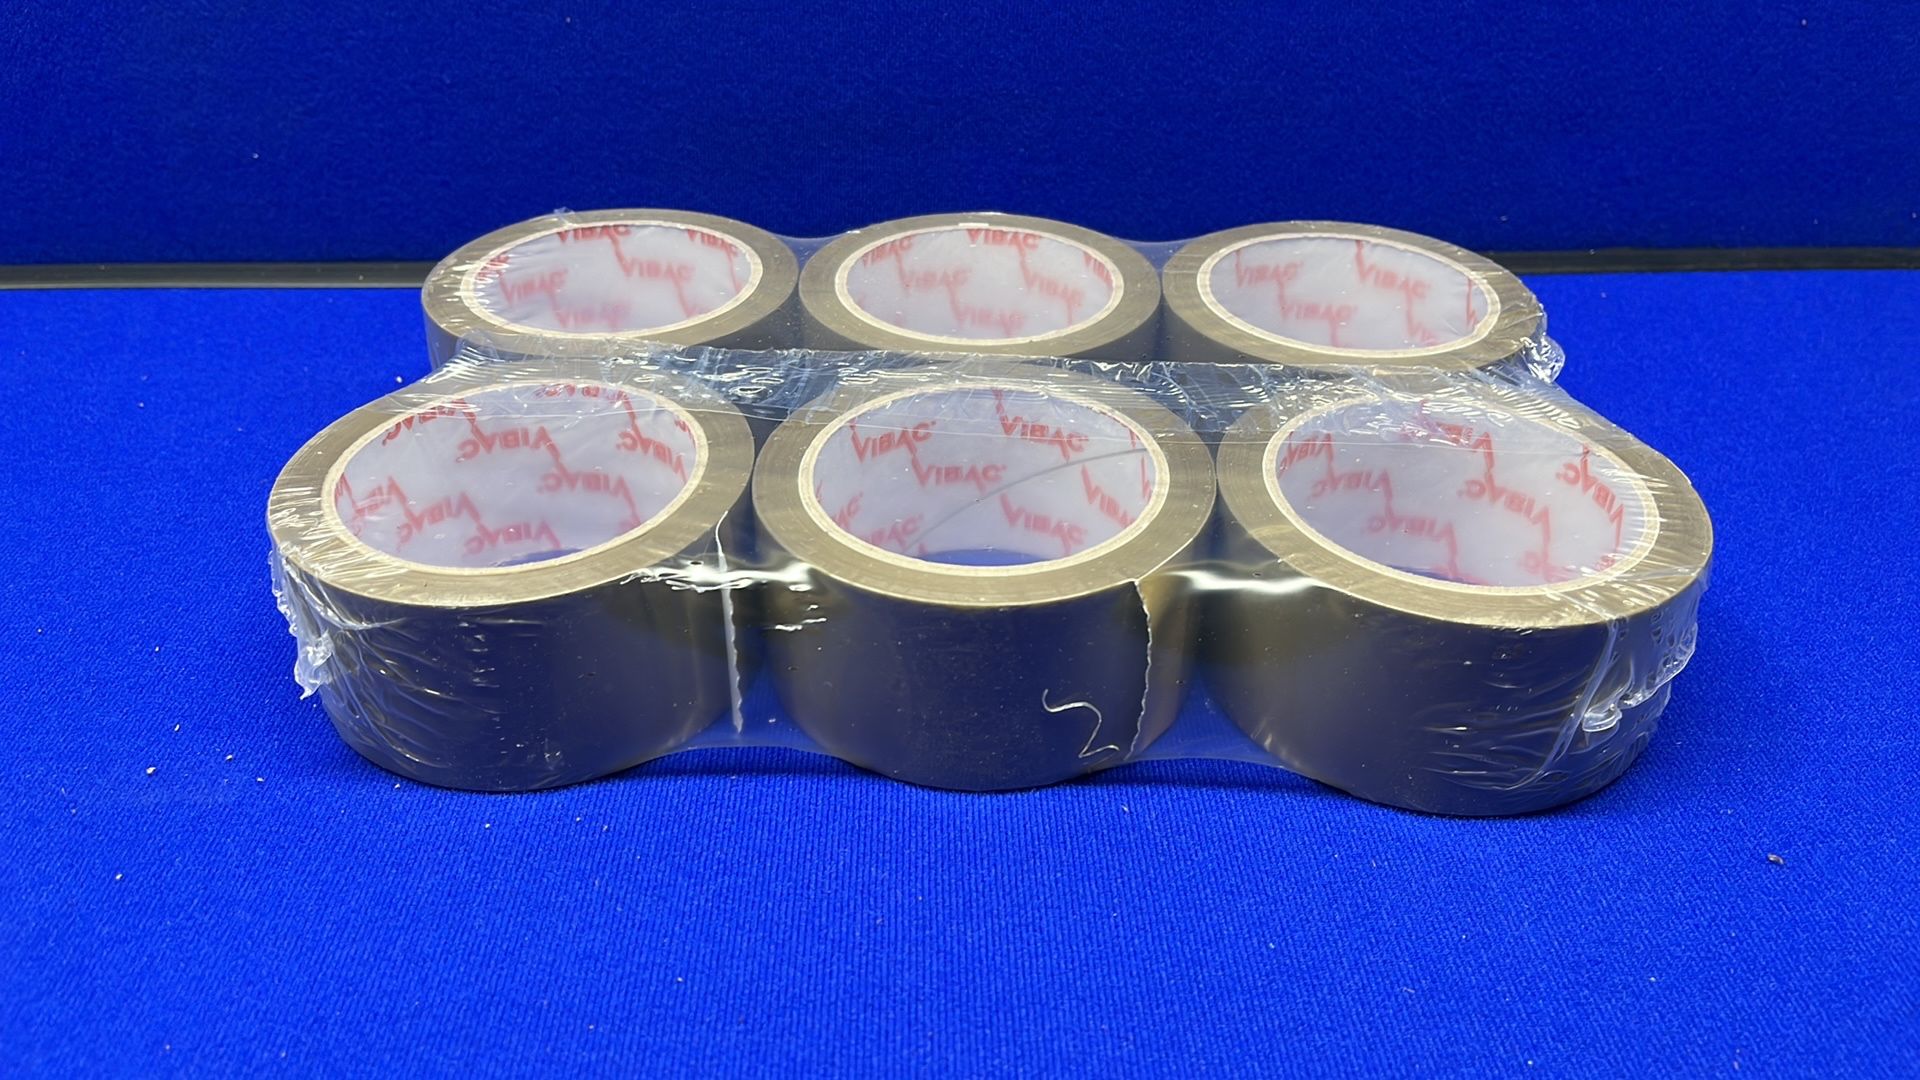 36 x Rolls Of Vibac PP401 Brown Packaging Tape